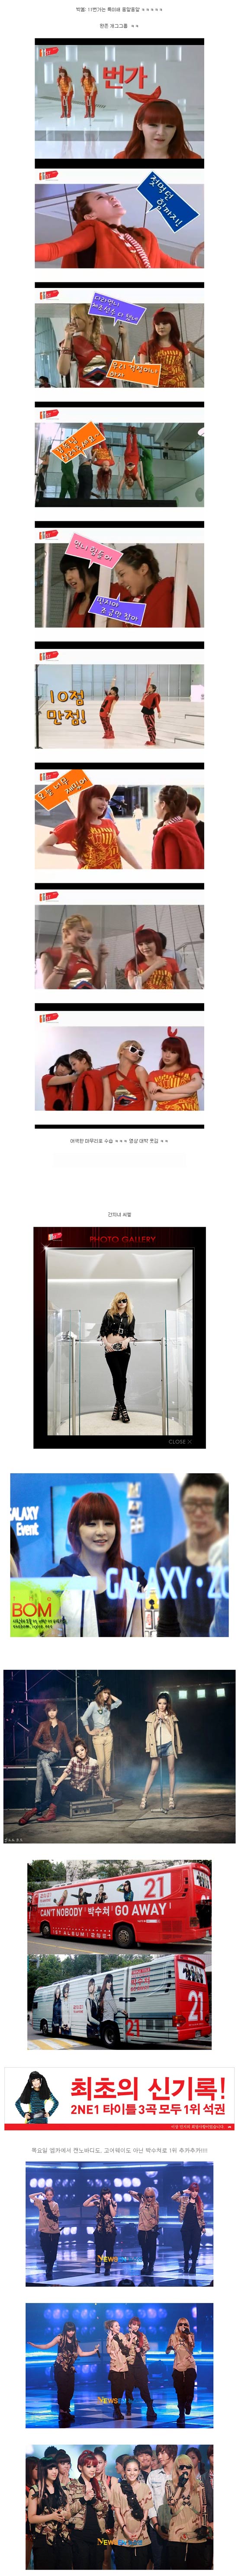 2NE1 쇼핑몰 광고, 이번에는 체조선수로 변신?